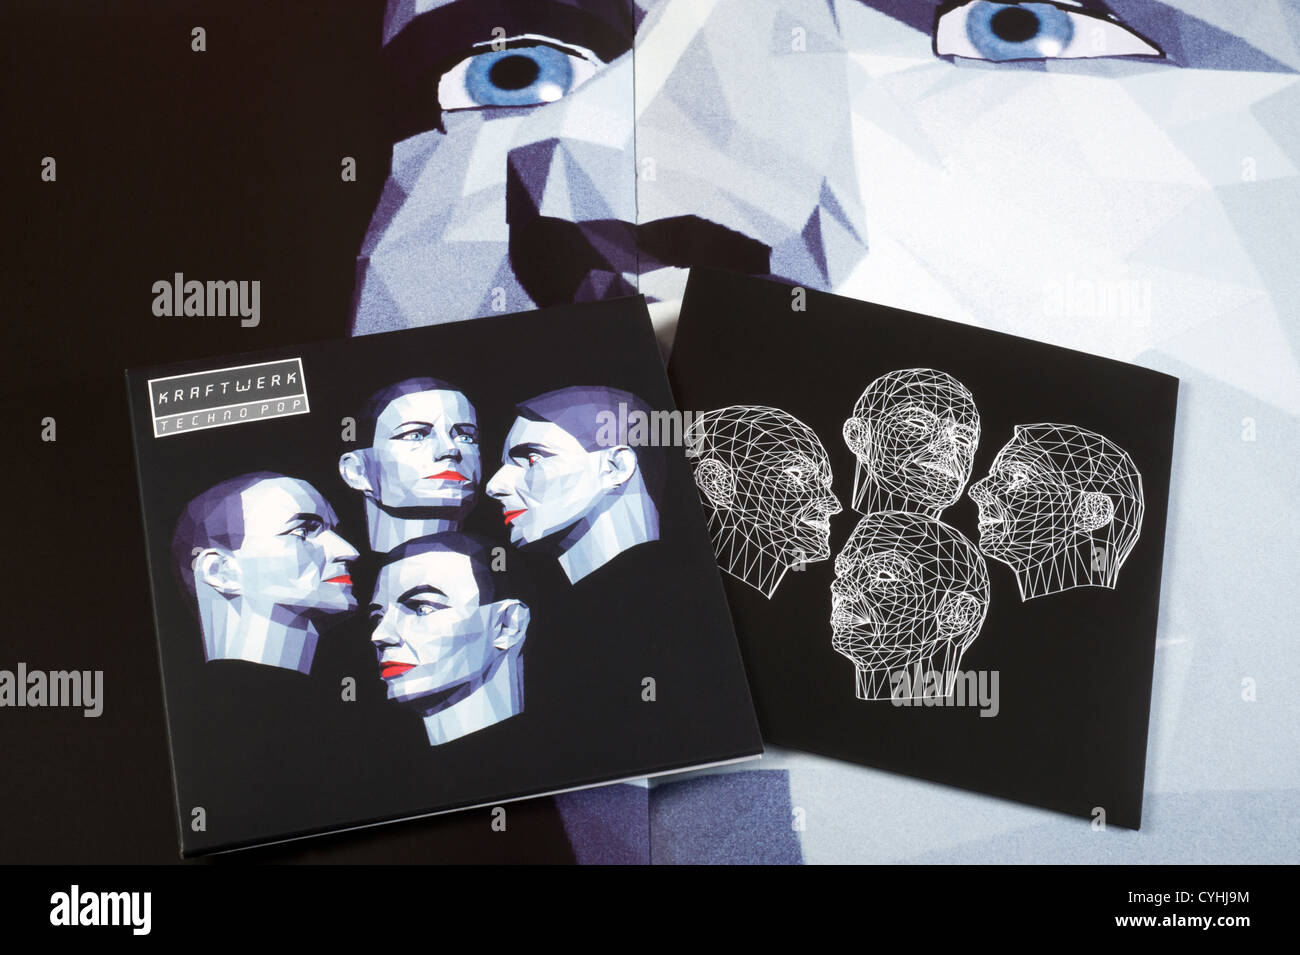 Kraftwerk techno pop cd hi-res stock photography and images - Alamy